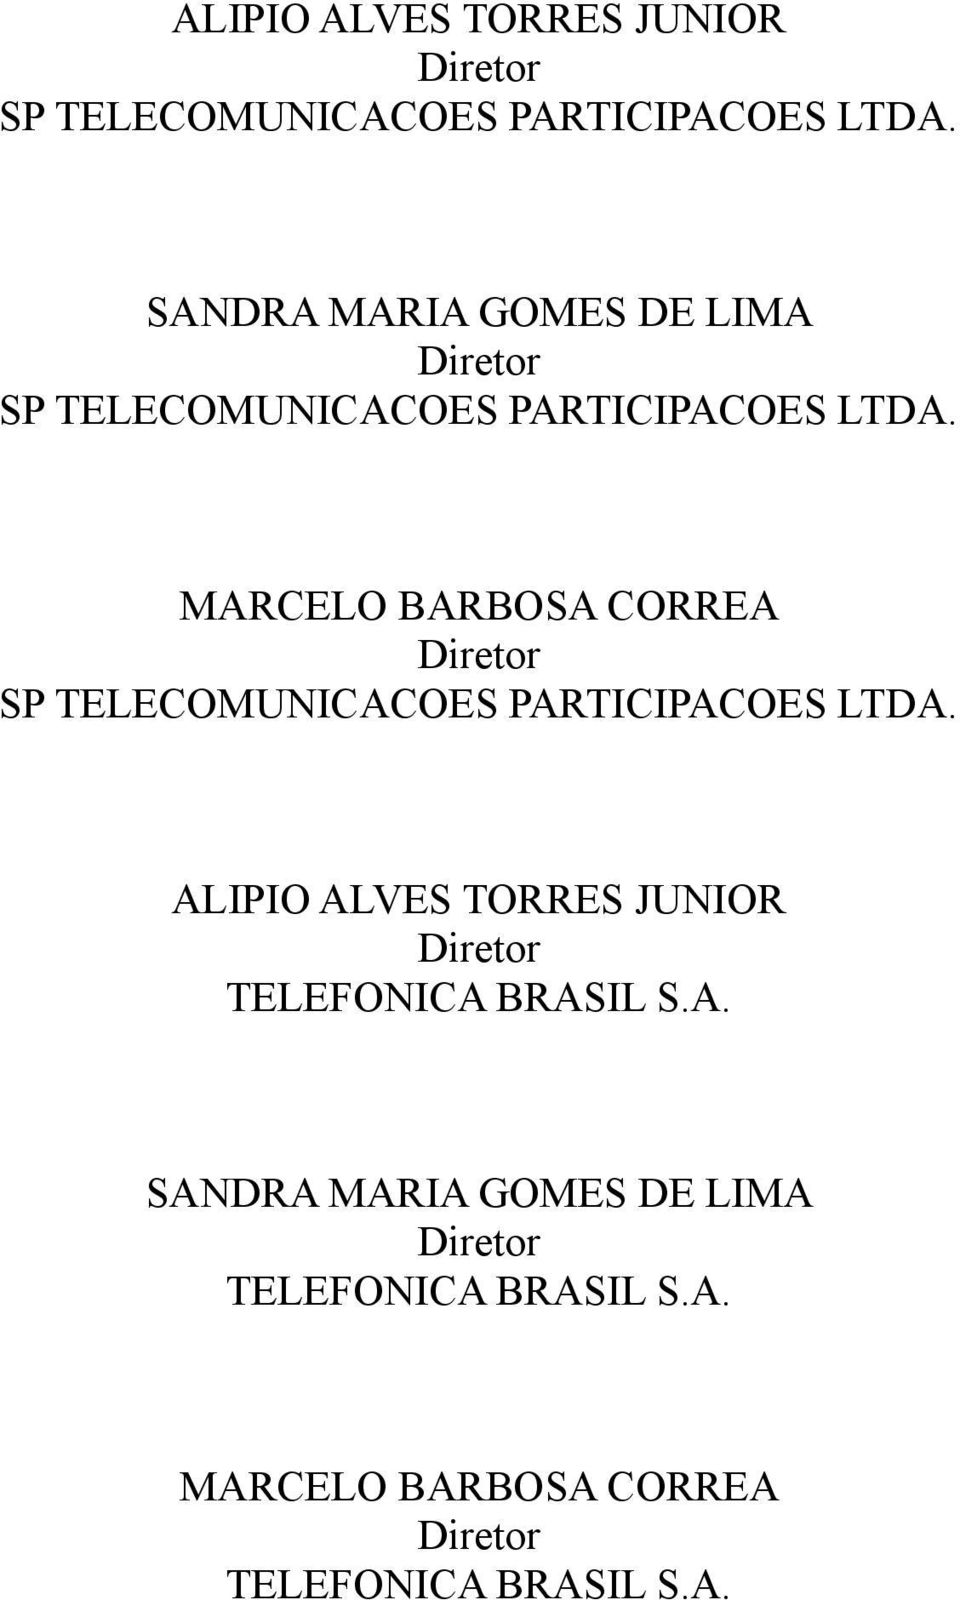 MARCELO BARBOSA CORREA SP TELECOMUNICACOES PARTICIPACOES LTDA.